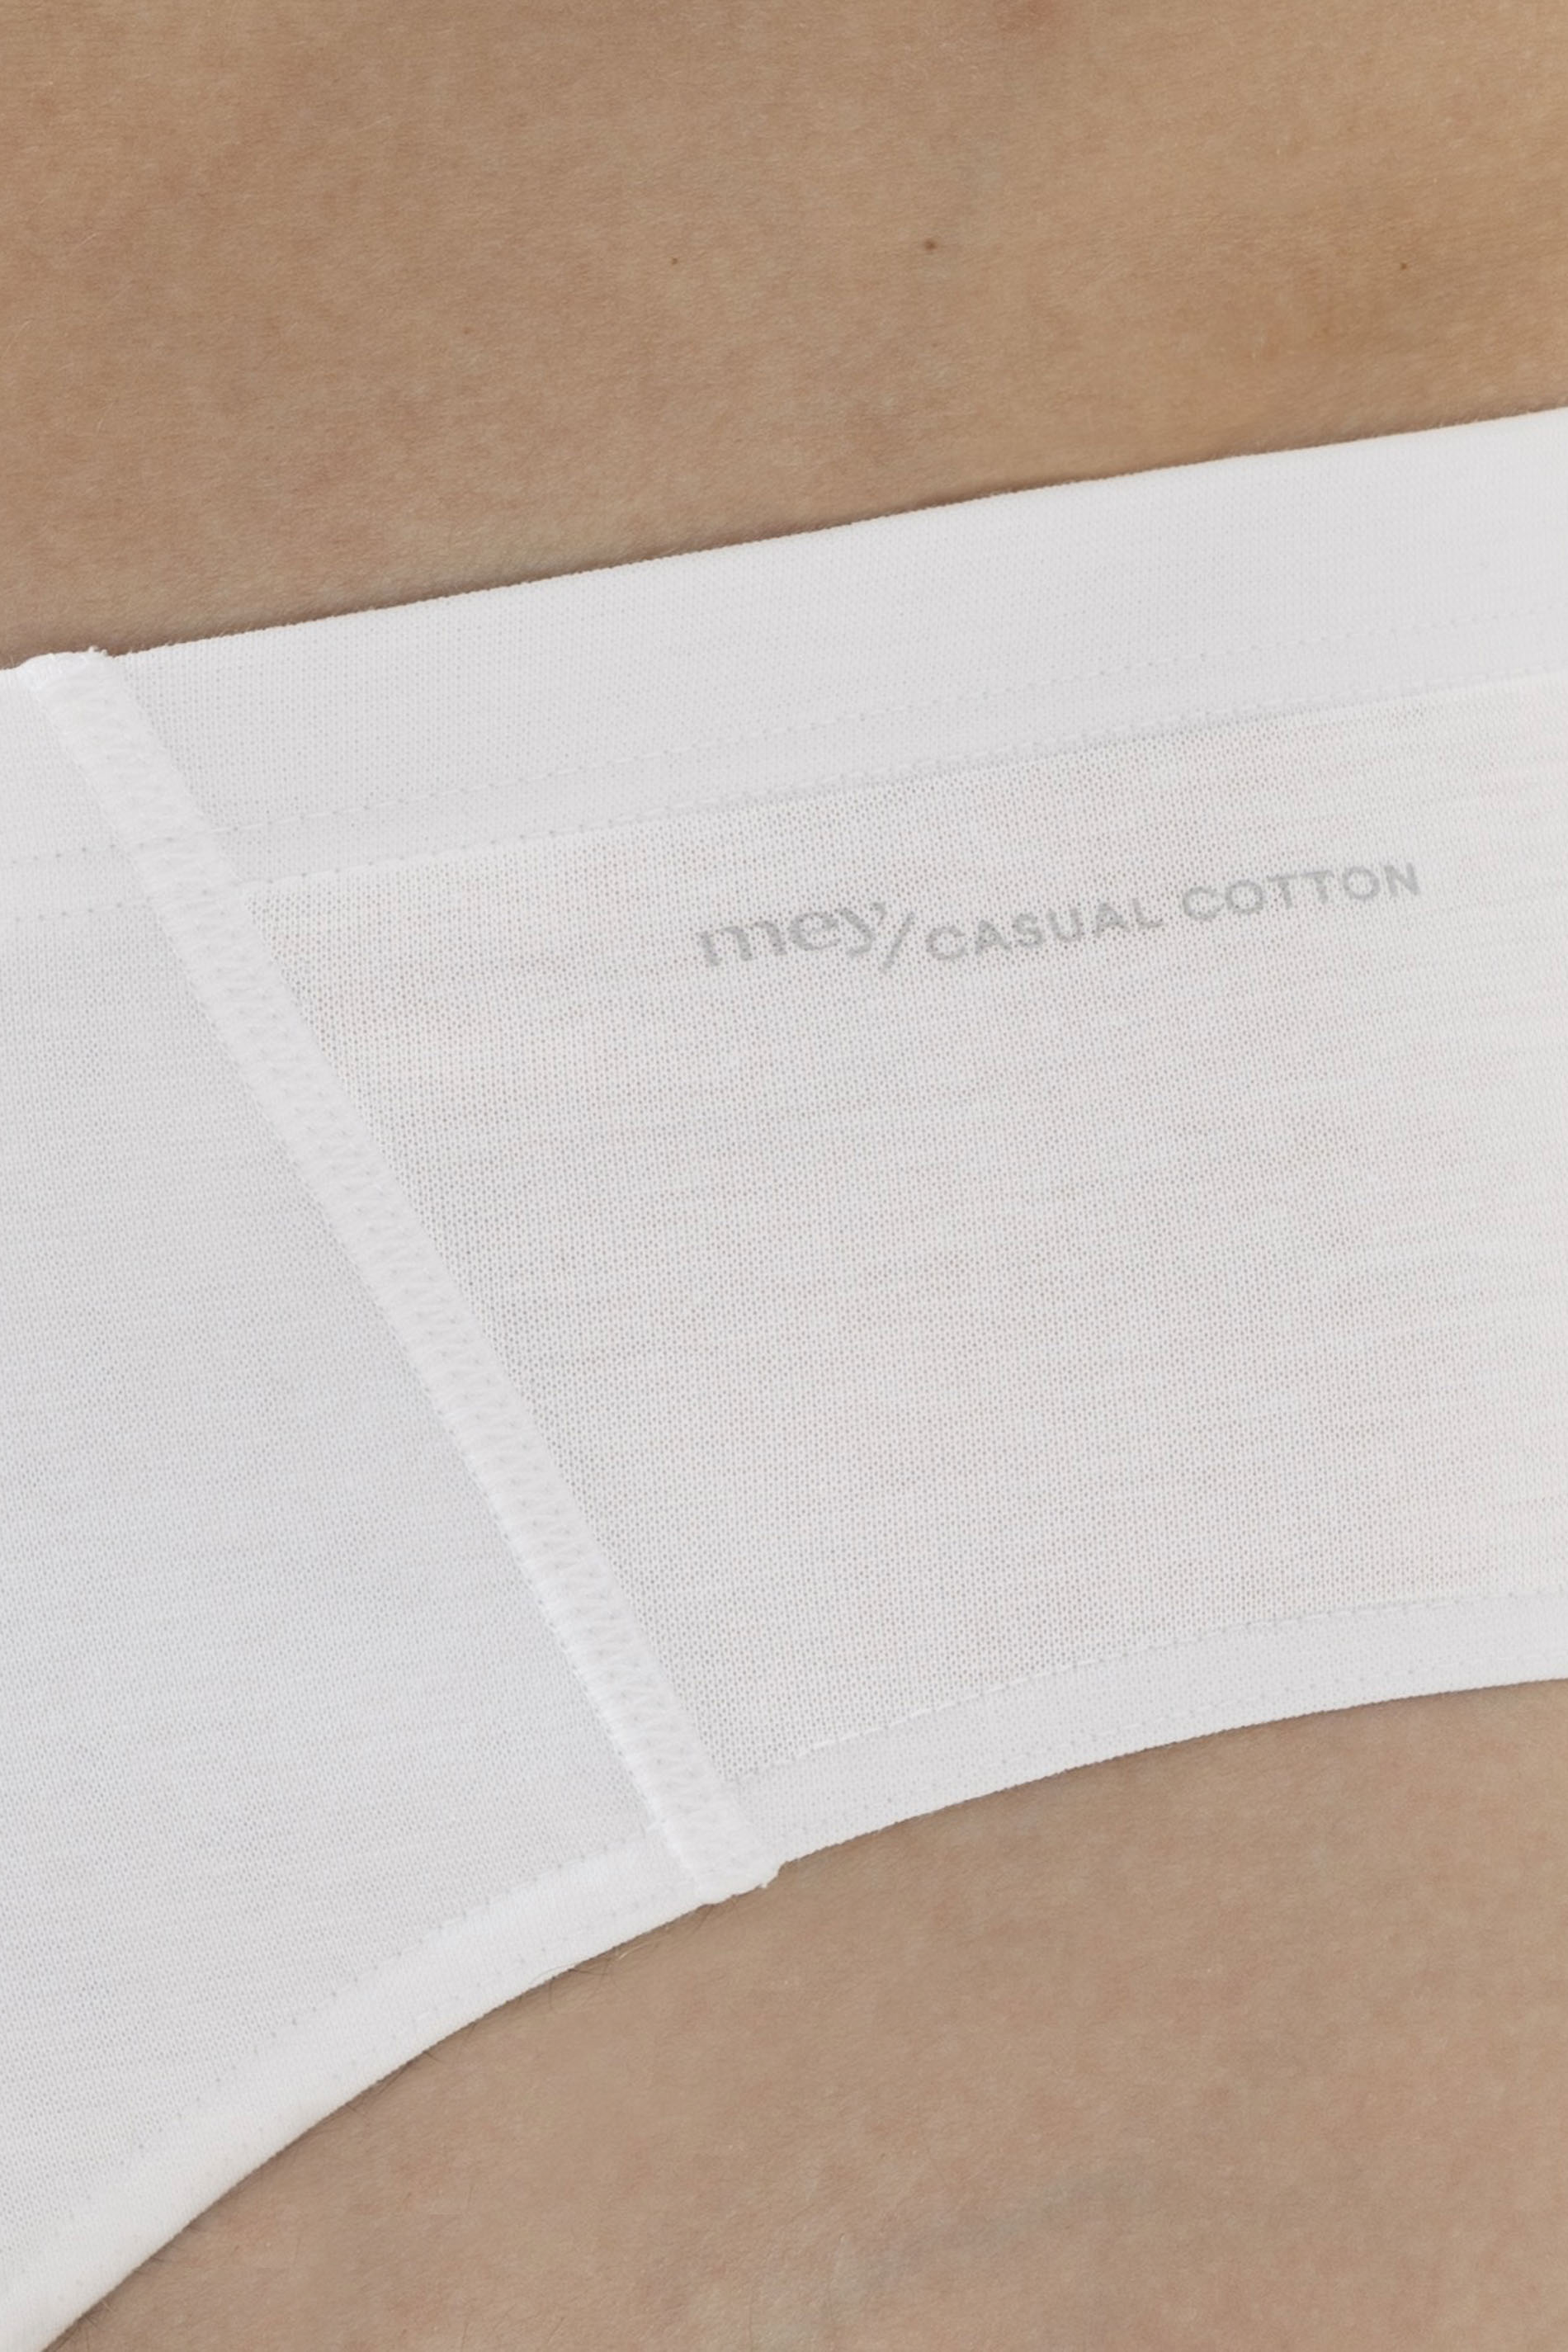 Minislip Wit Serie Casual Cotton Detailweergave 01 | mey®